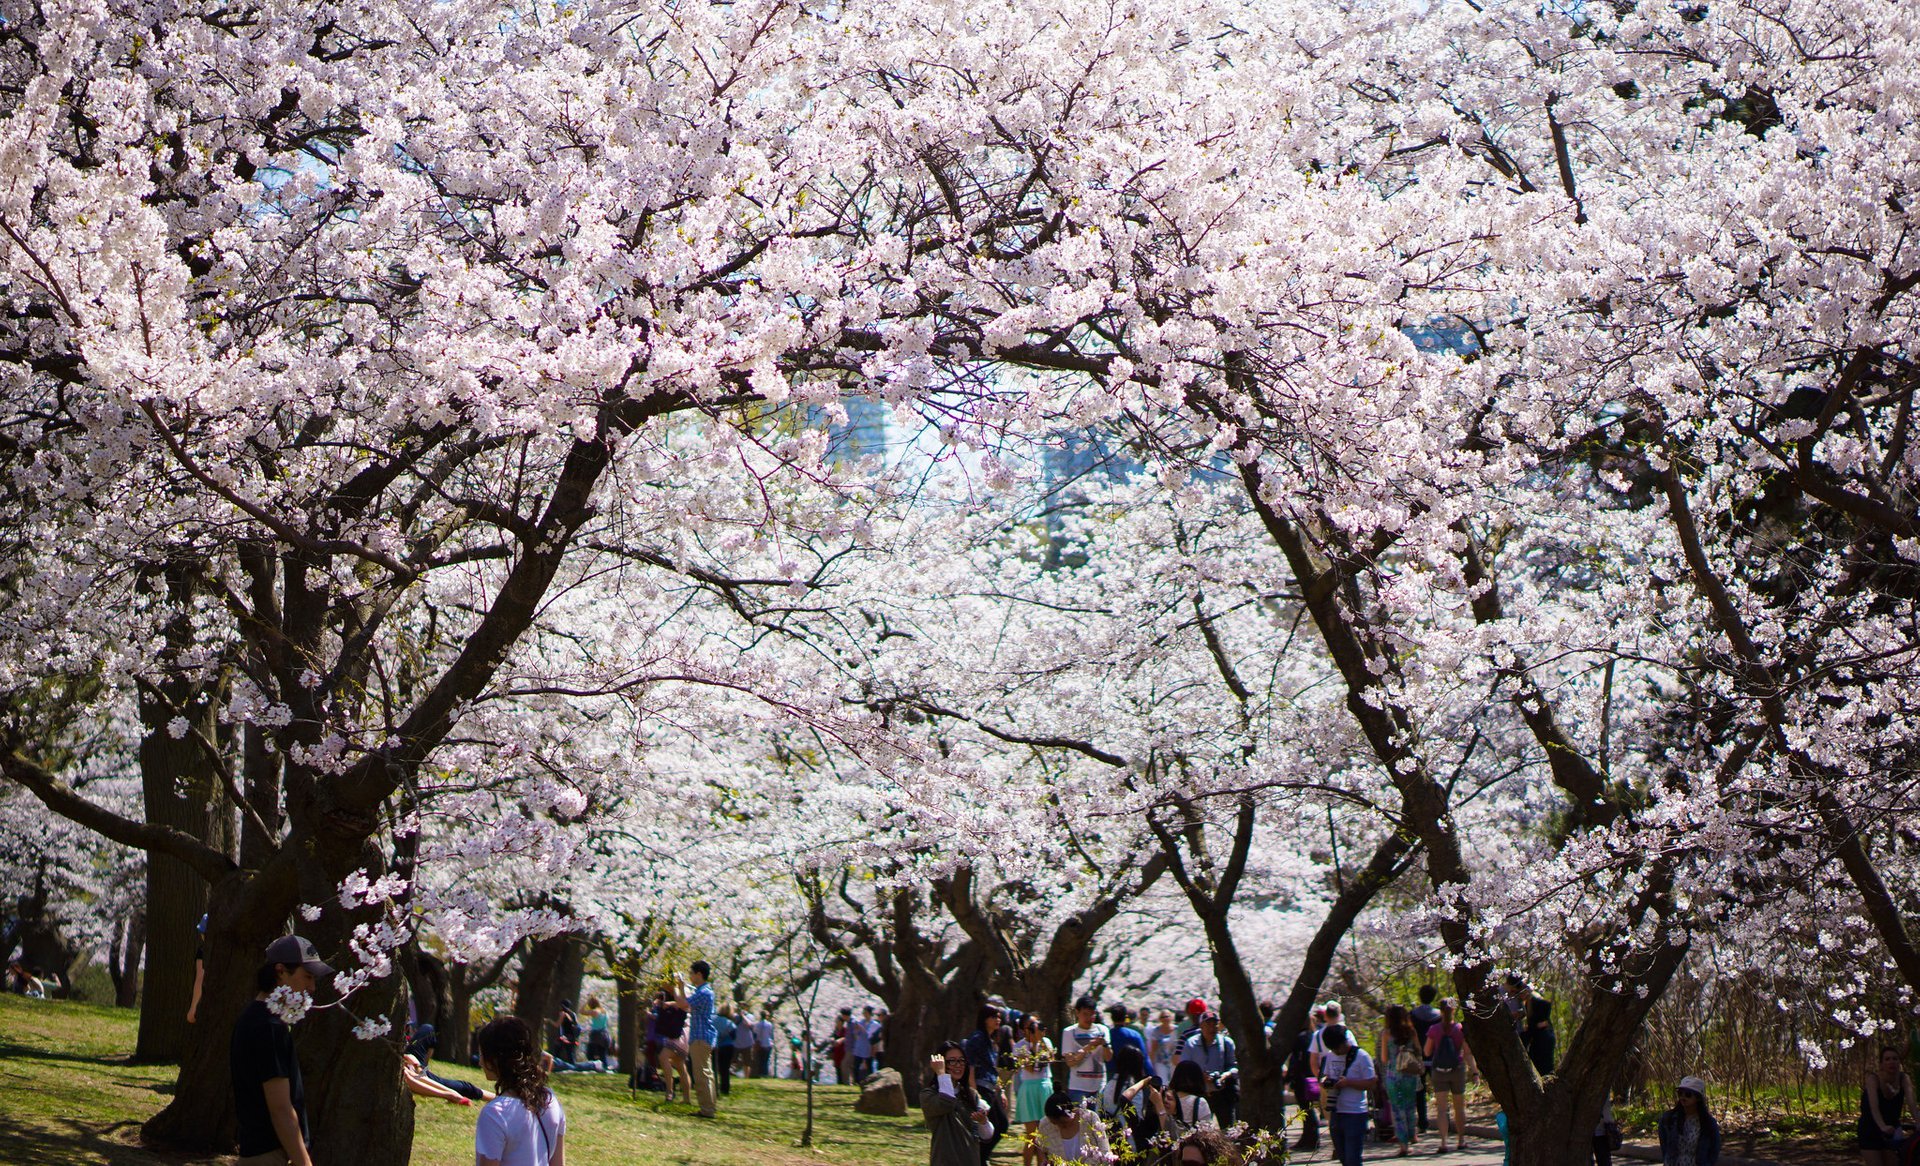 Image result for high park cherry blossom festival 2019